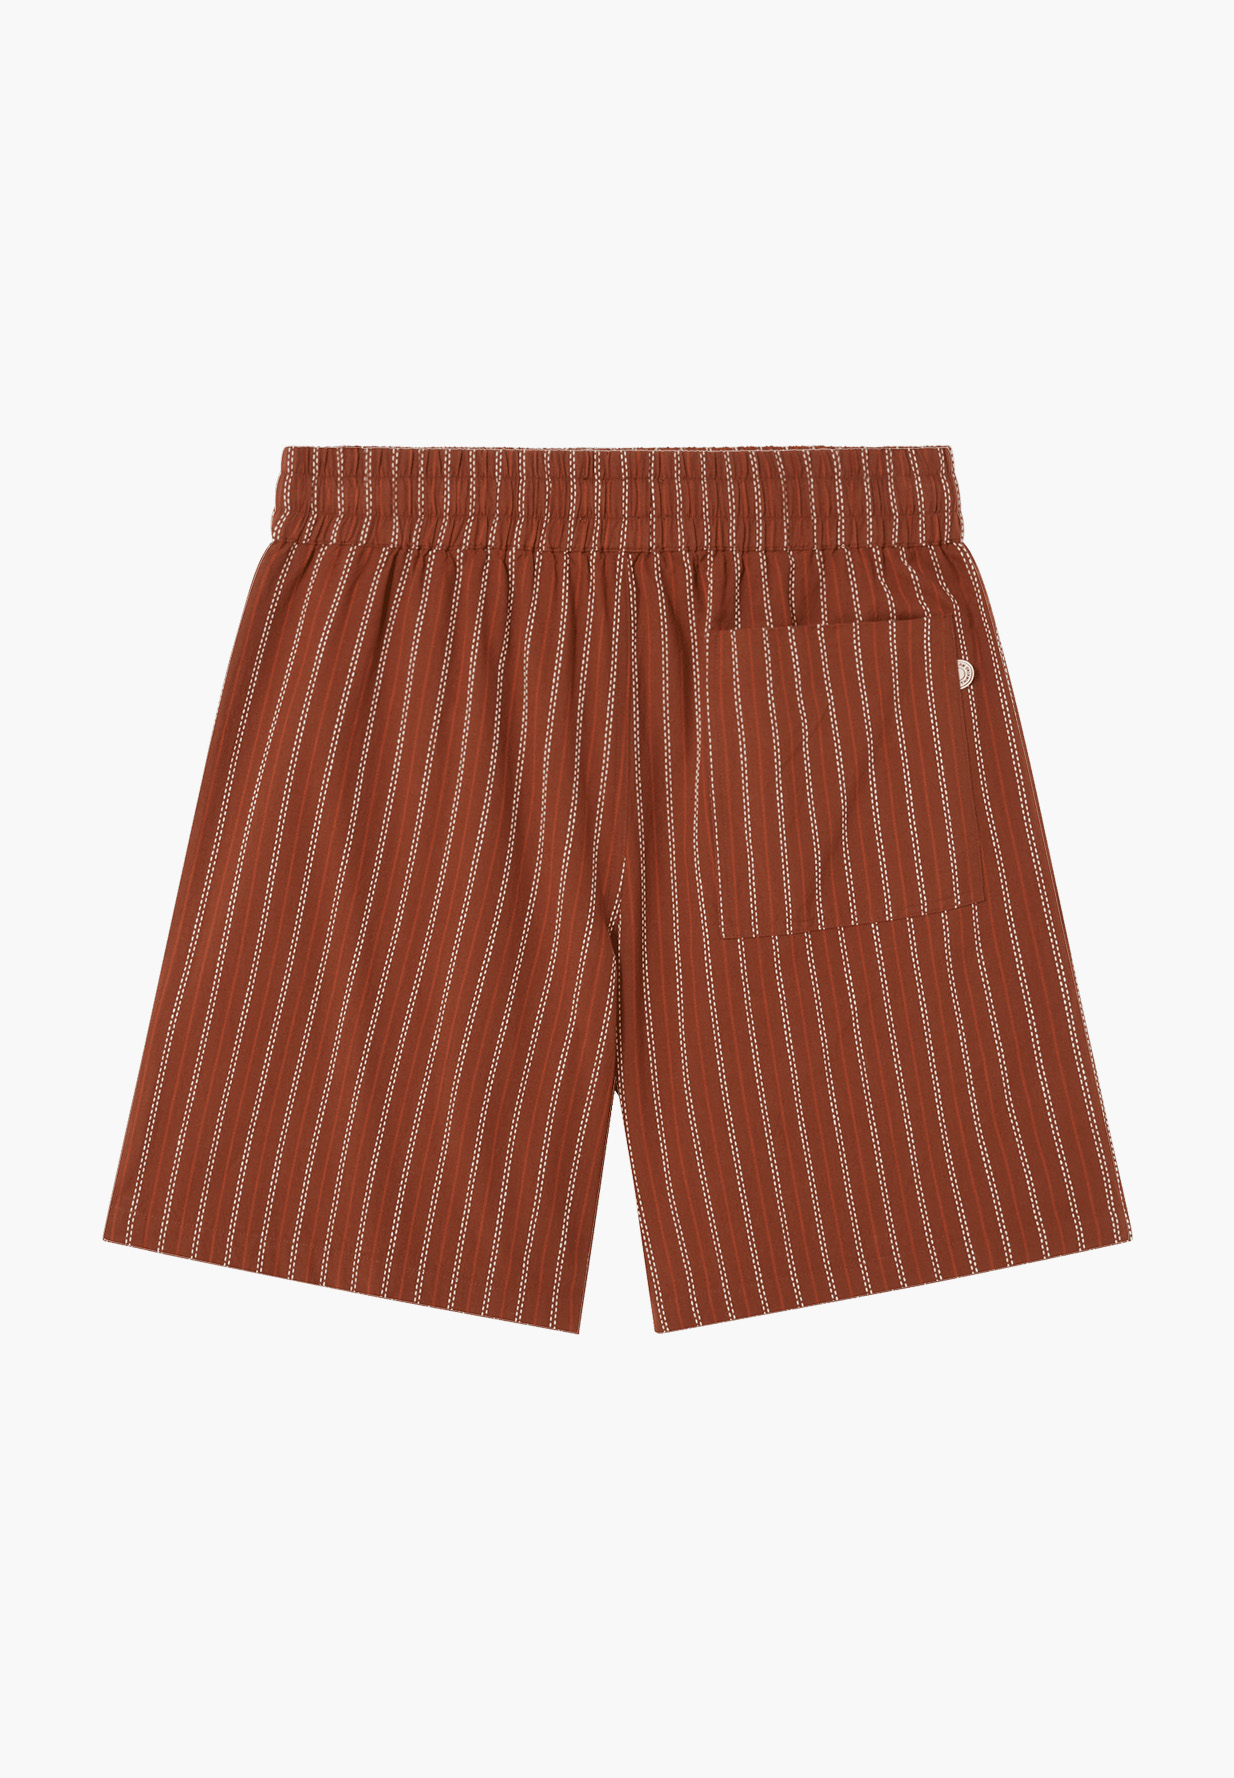 THINKING MU Shorts Henry Delhi Stripes toasted XL